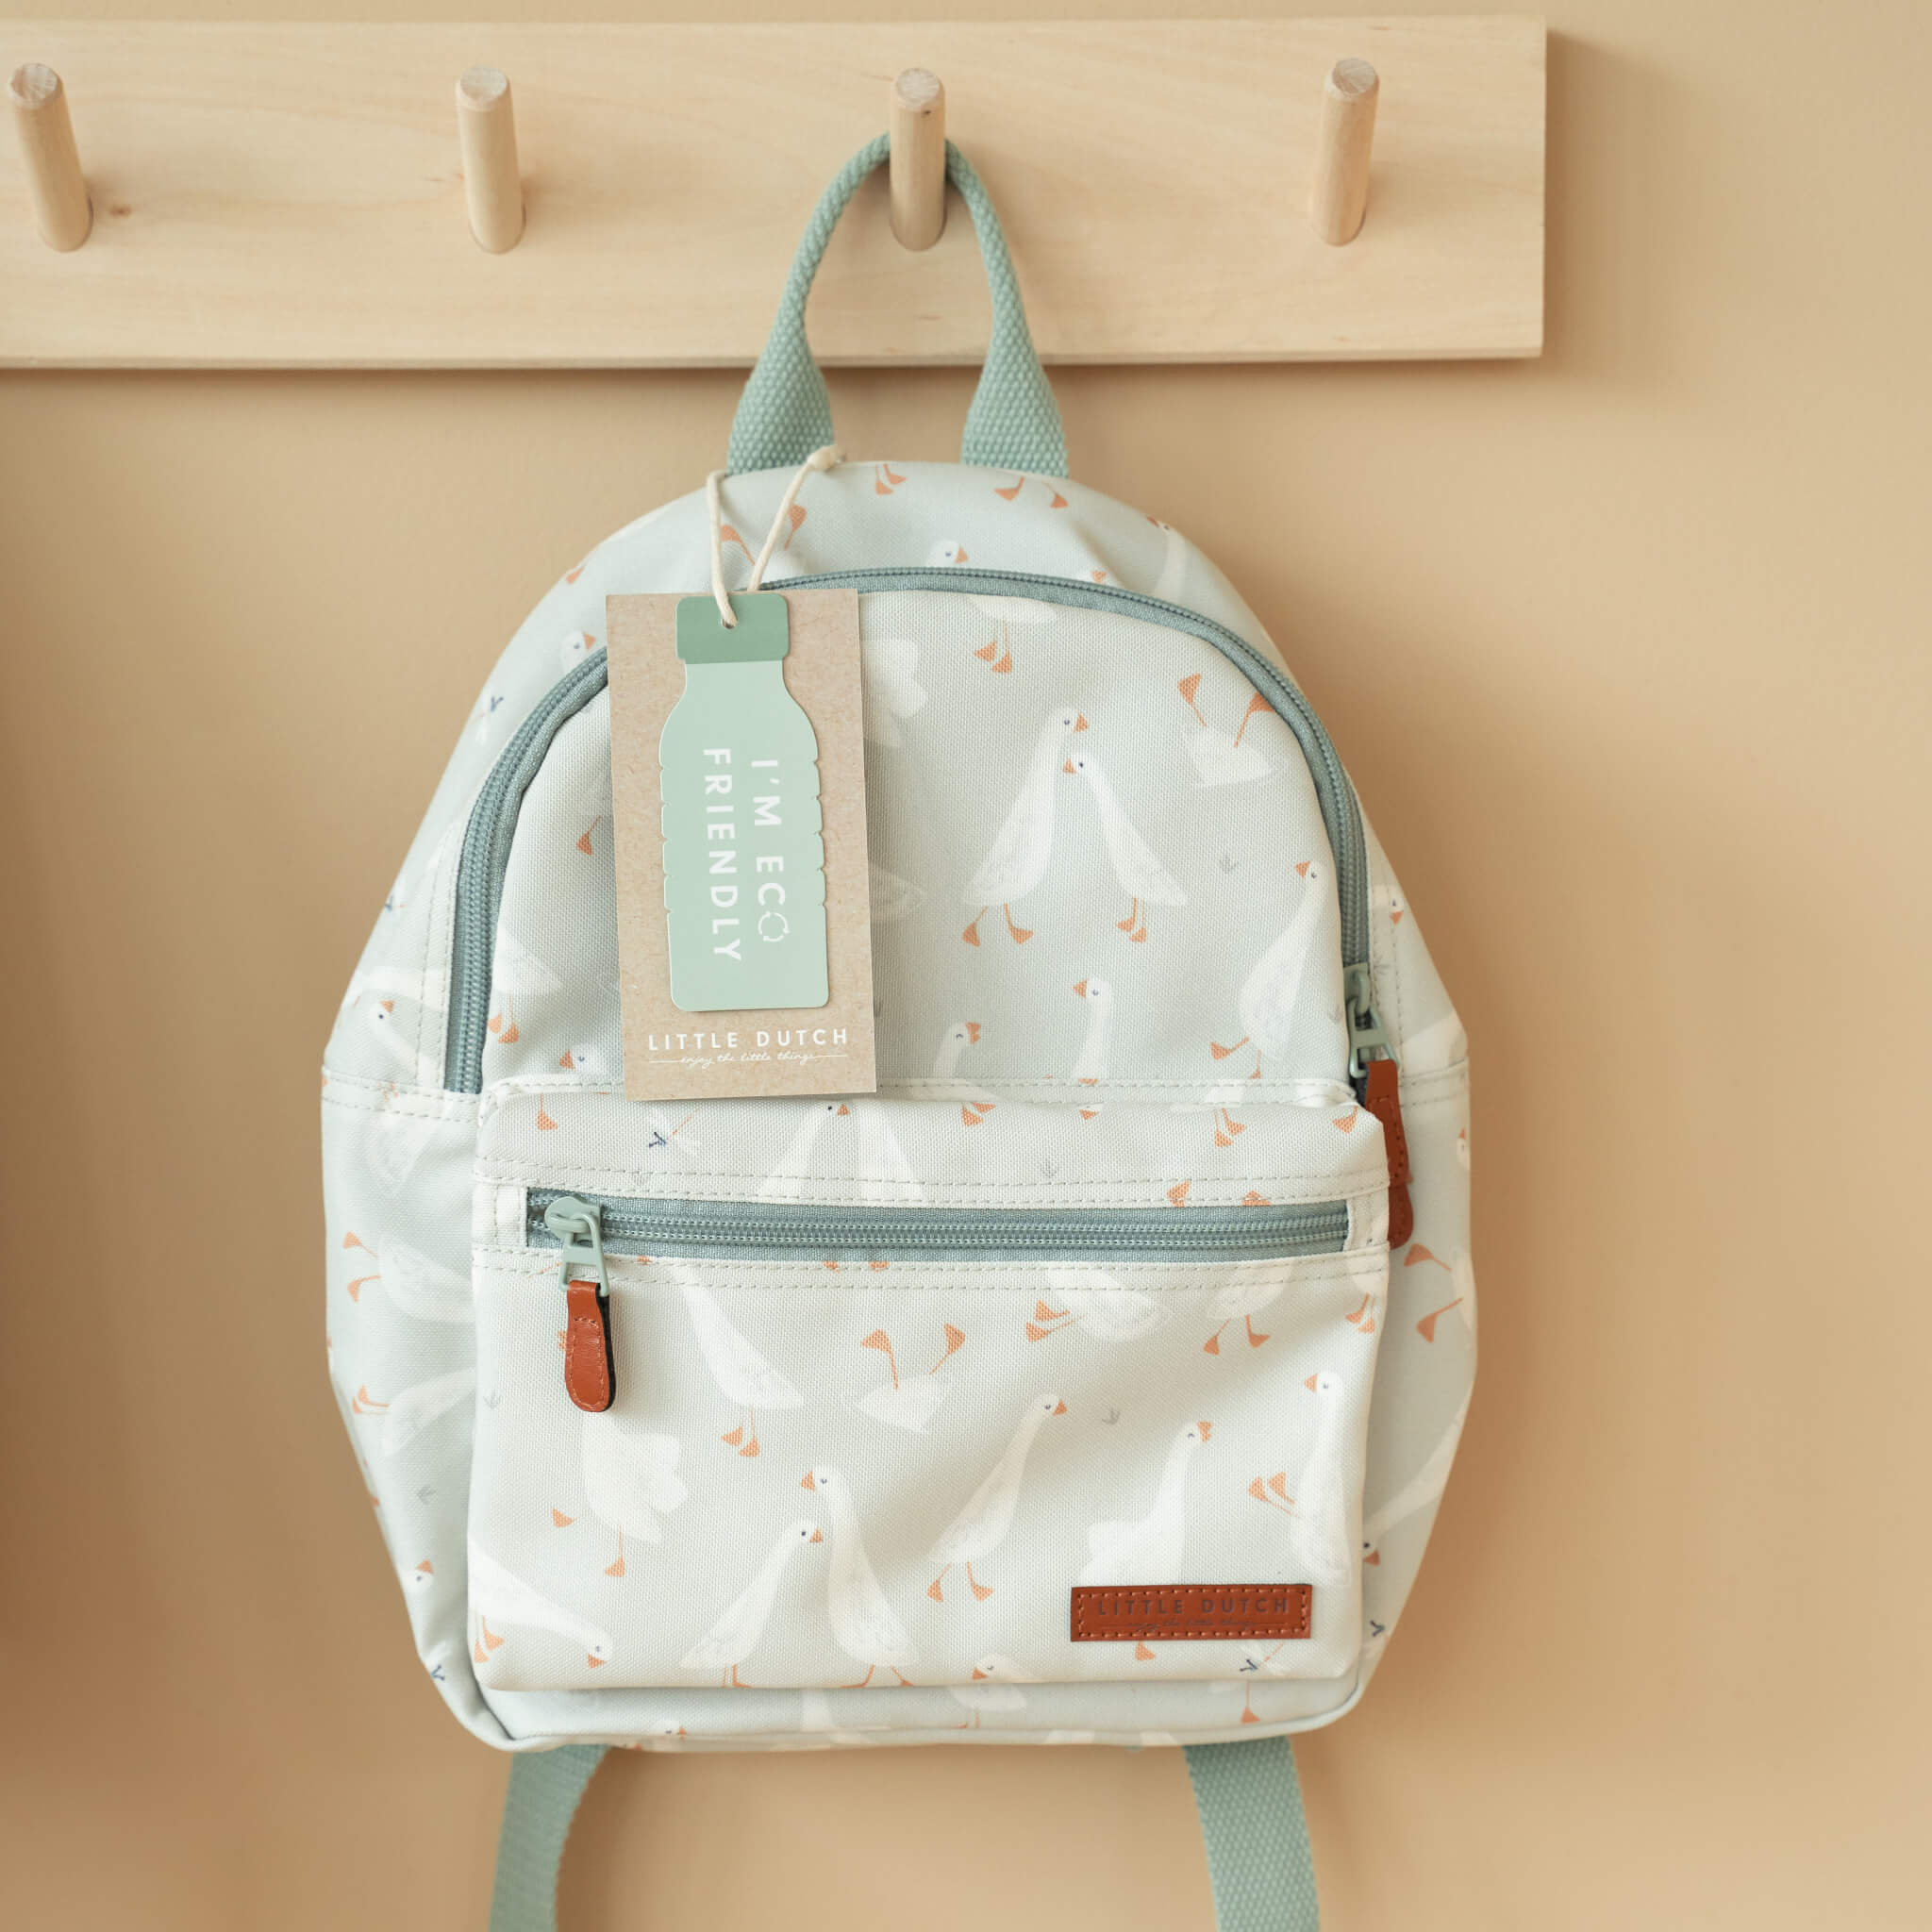 Little Dutch Backpack in Little Goose Design on Peg